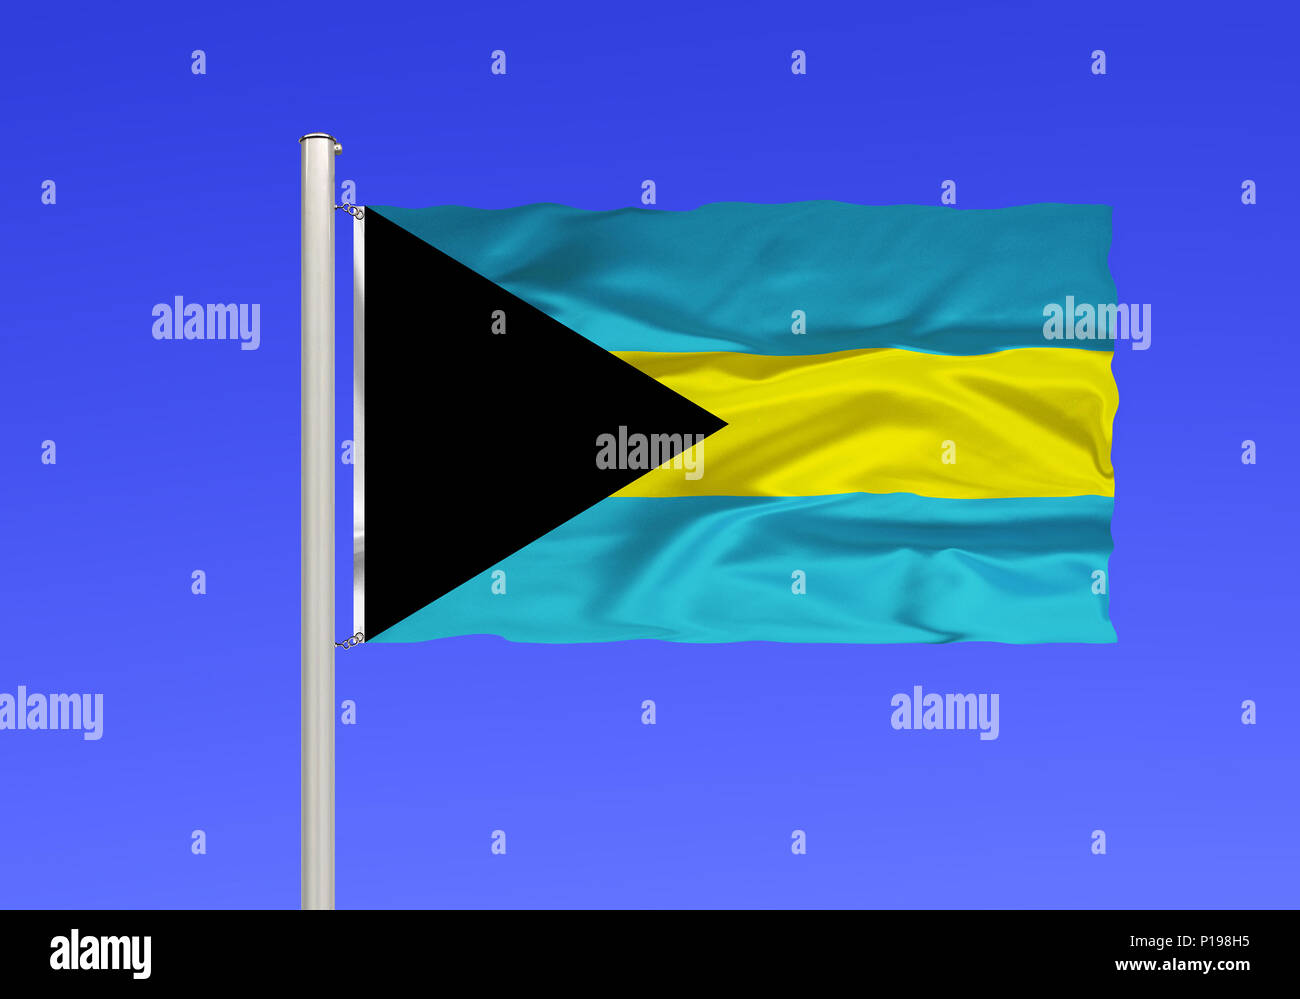 Bandiera delle Bahamas, Stato insulare dell Atlantico, parte del West Indian islands,, Flagge von den Bahamas, Inselstaat, Atlantik, Teil der Westindischen In Foto Stock